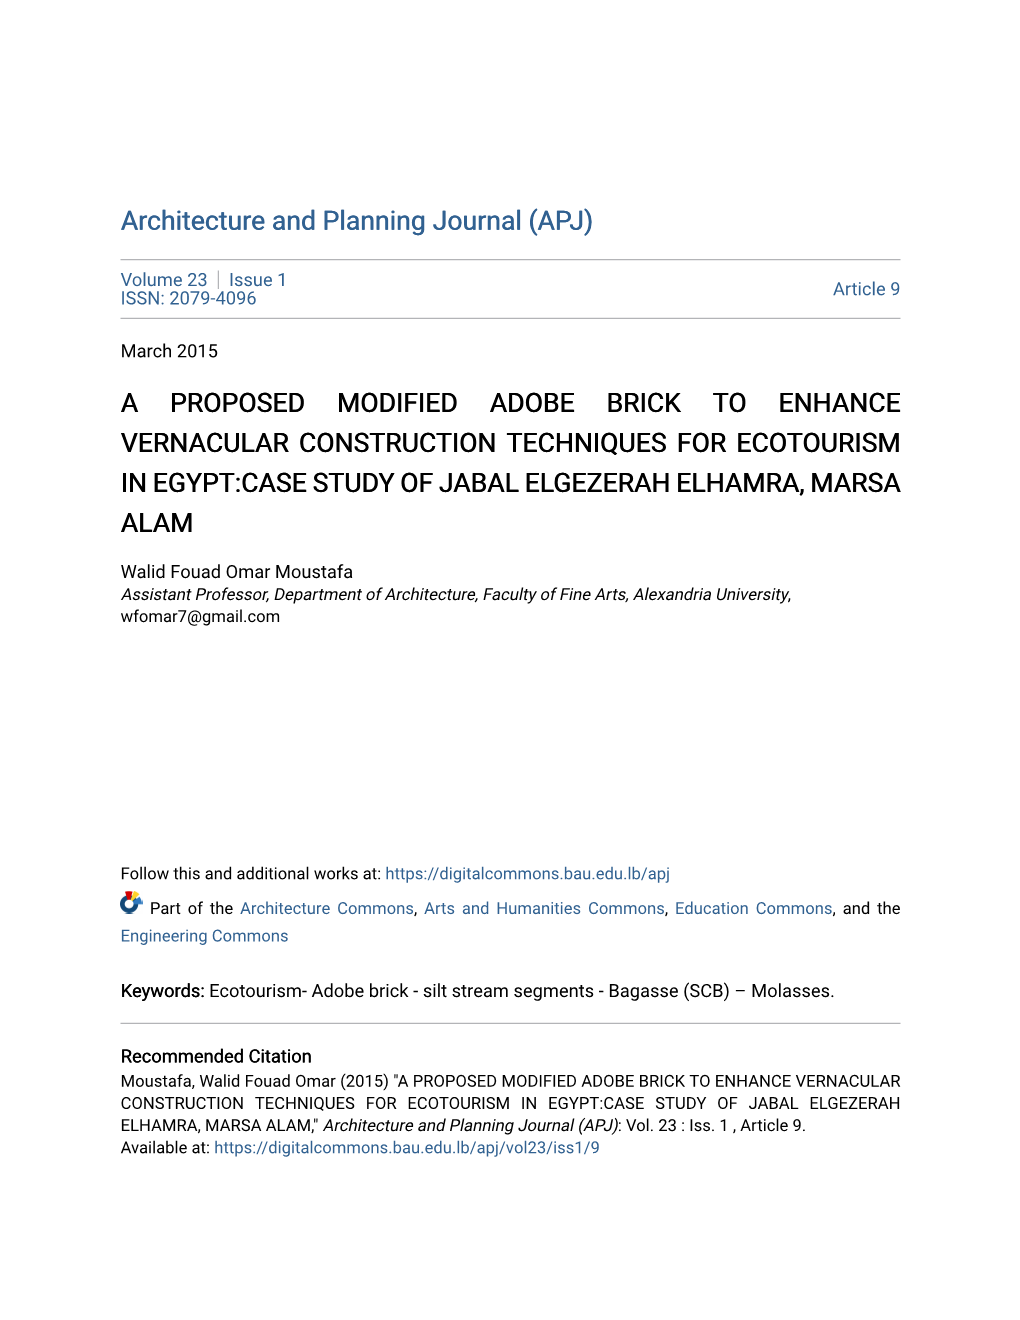 A Proposed Modified Adobe Brick to Enhance Vernacular Construction Techniques for Ecotourism in Egypt:Case Study of Jabal Elgezerah Elhamra, Marsa Alam